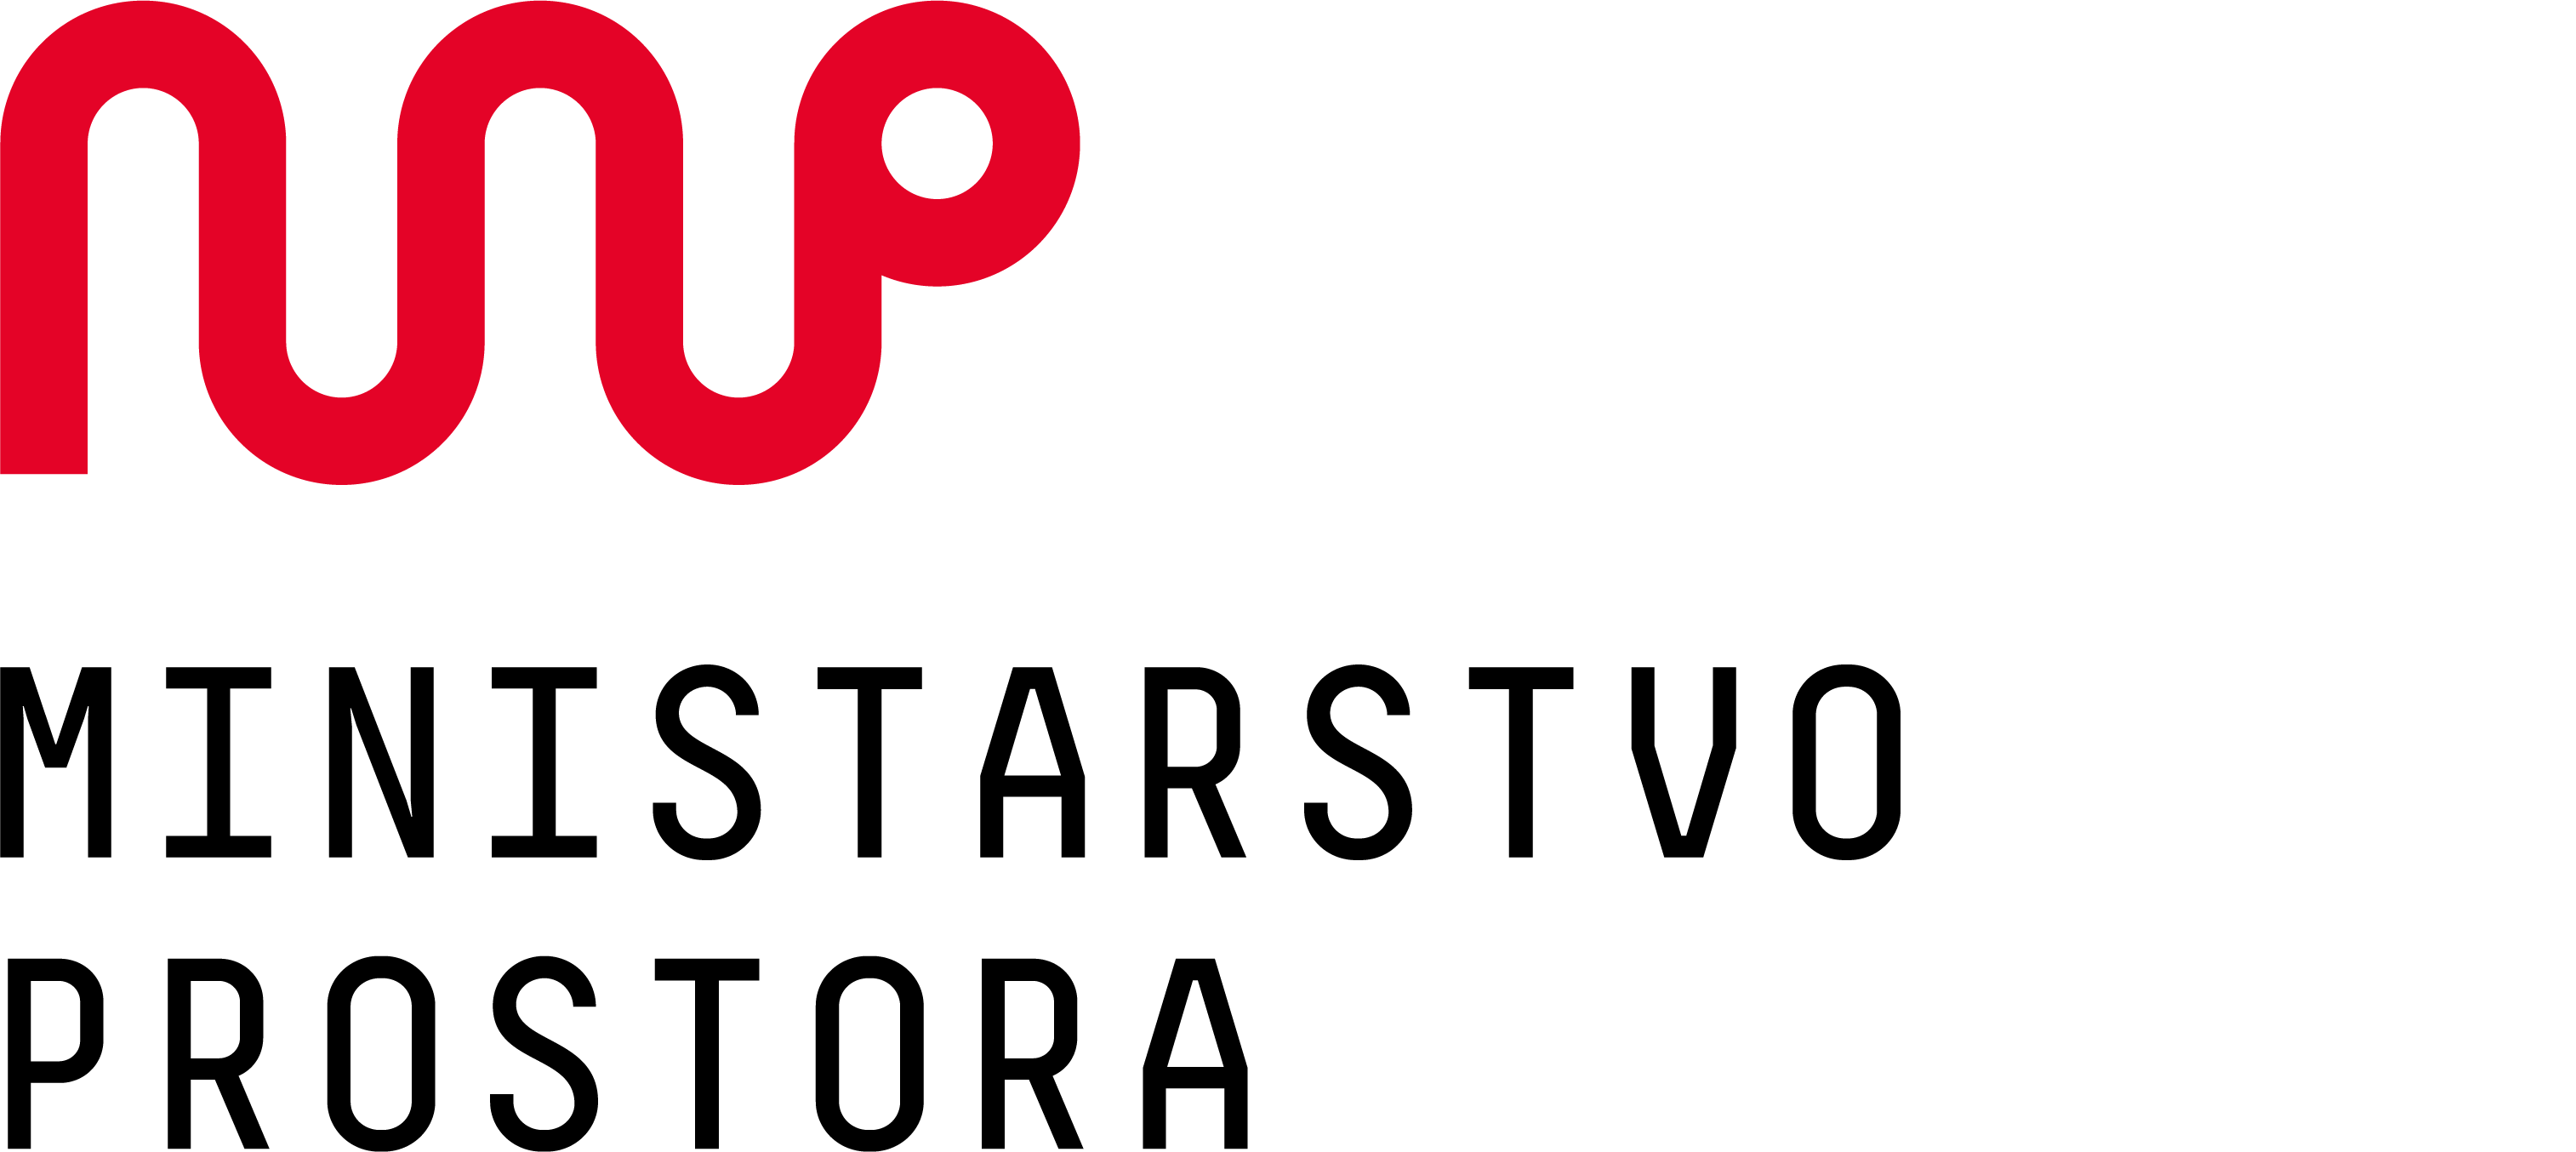 Logo MOS